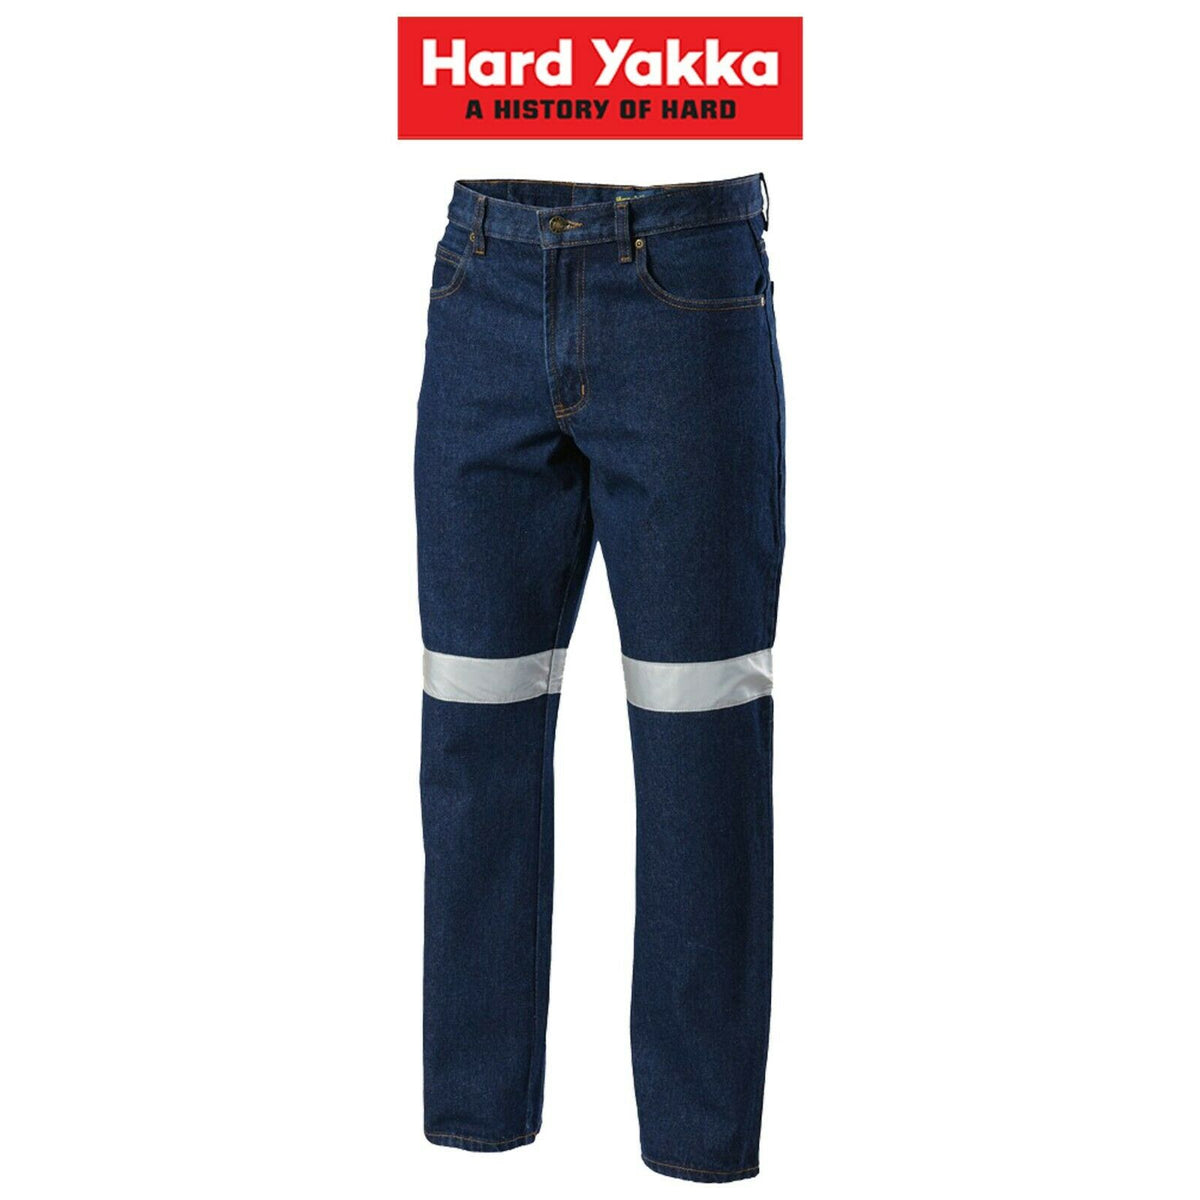 Hard Yakka Denim Jeans Taped Work Pants Heavy Duty Tough Farm Washed Y03513